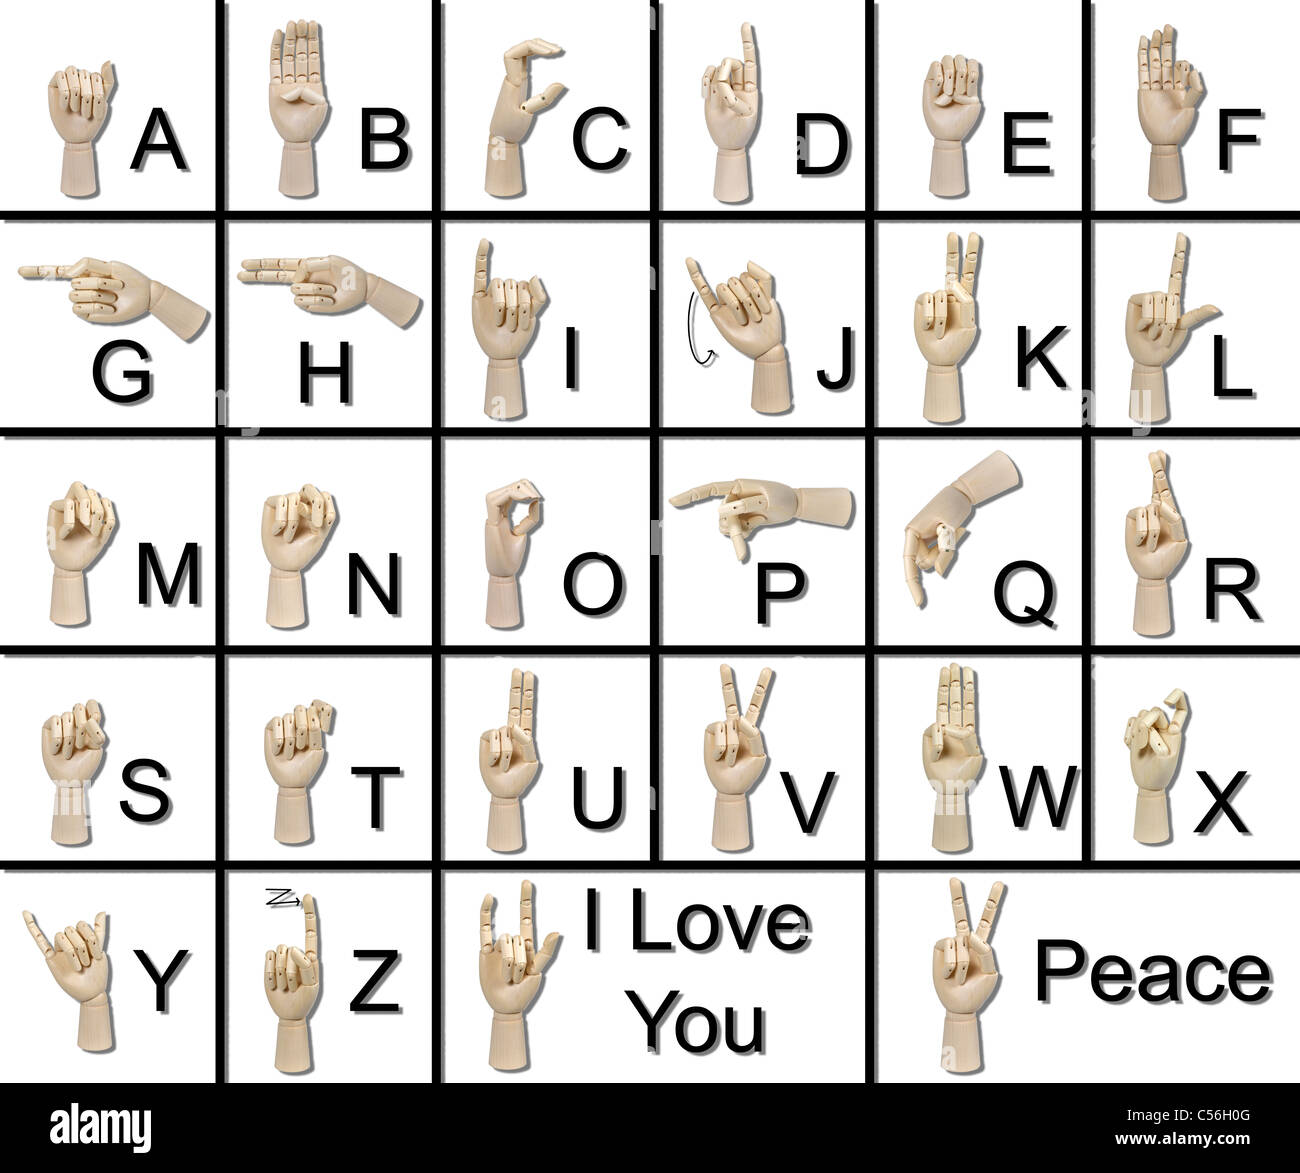 Hand sign language alphabet fotografías e imágenes de alta resolución -  Alamy